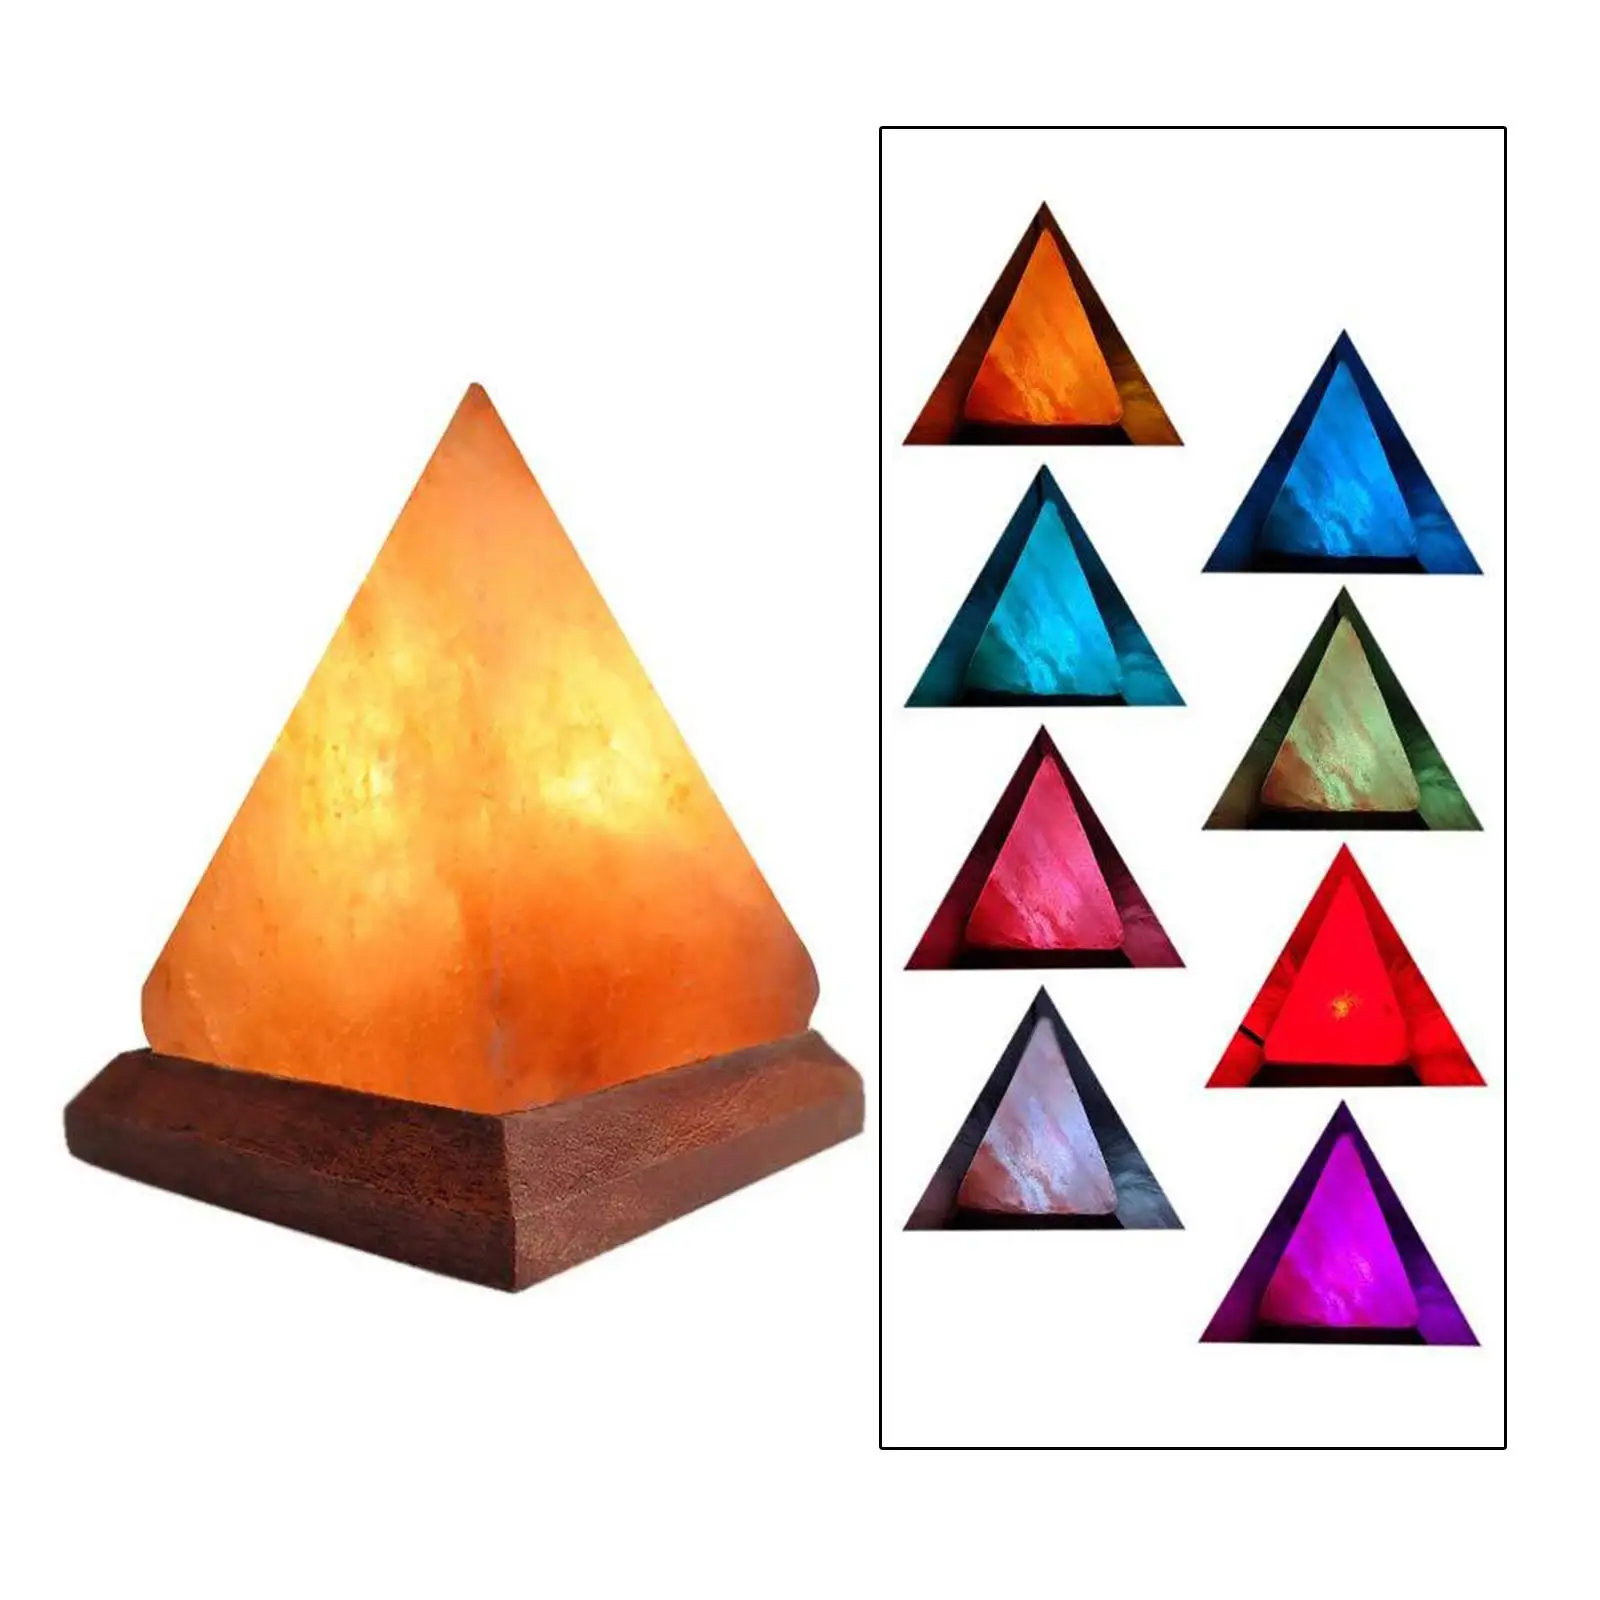 Portable Salt Lamp, USB Color Changing Rock Cord Wooden Light for Decor Desk